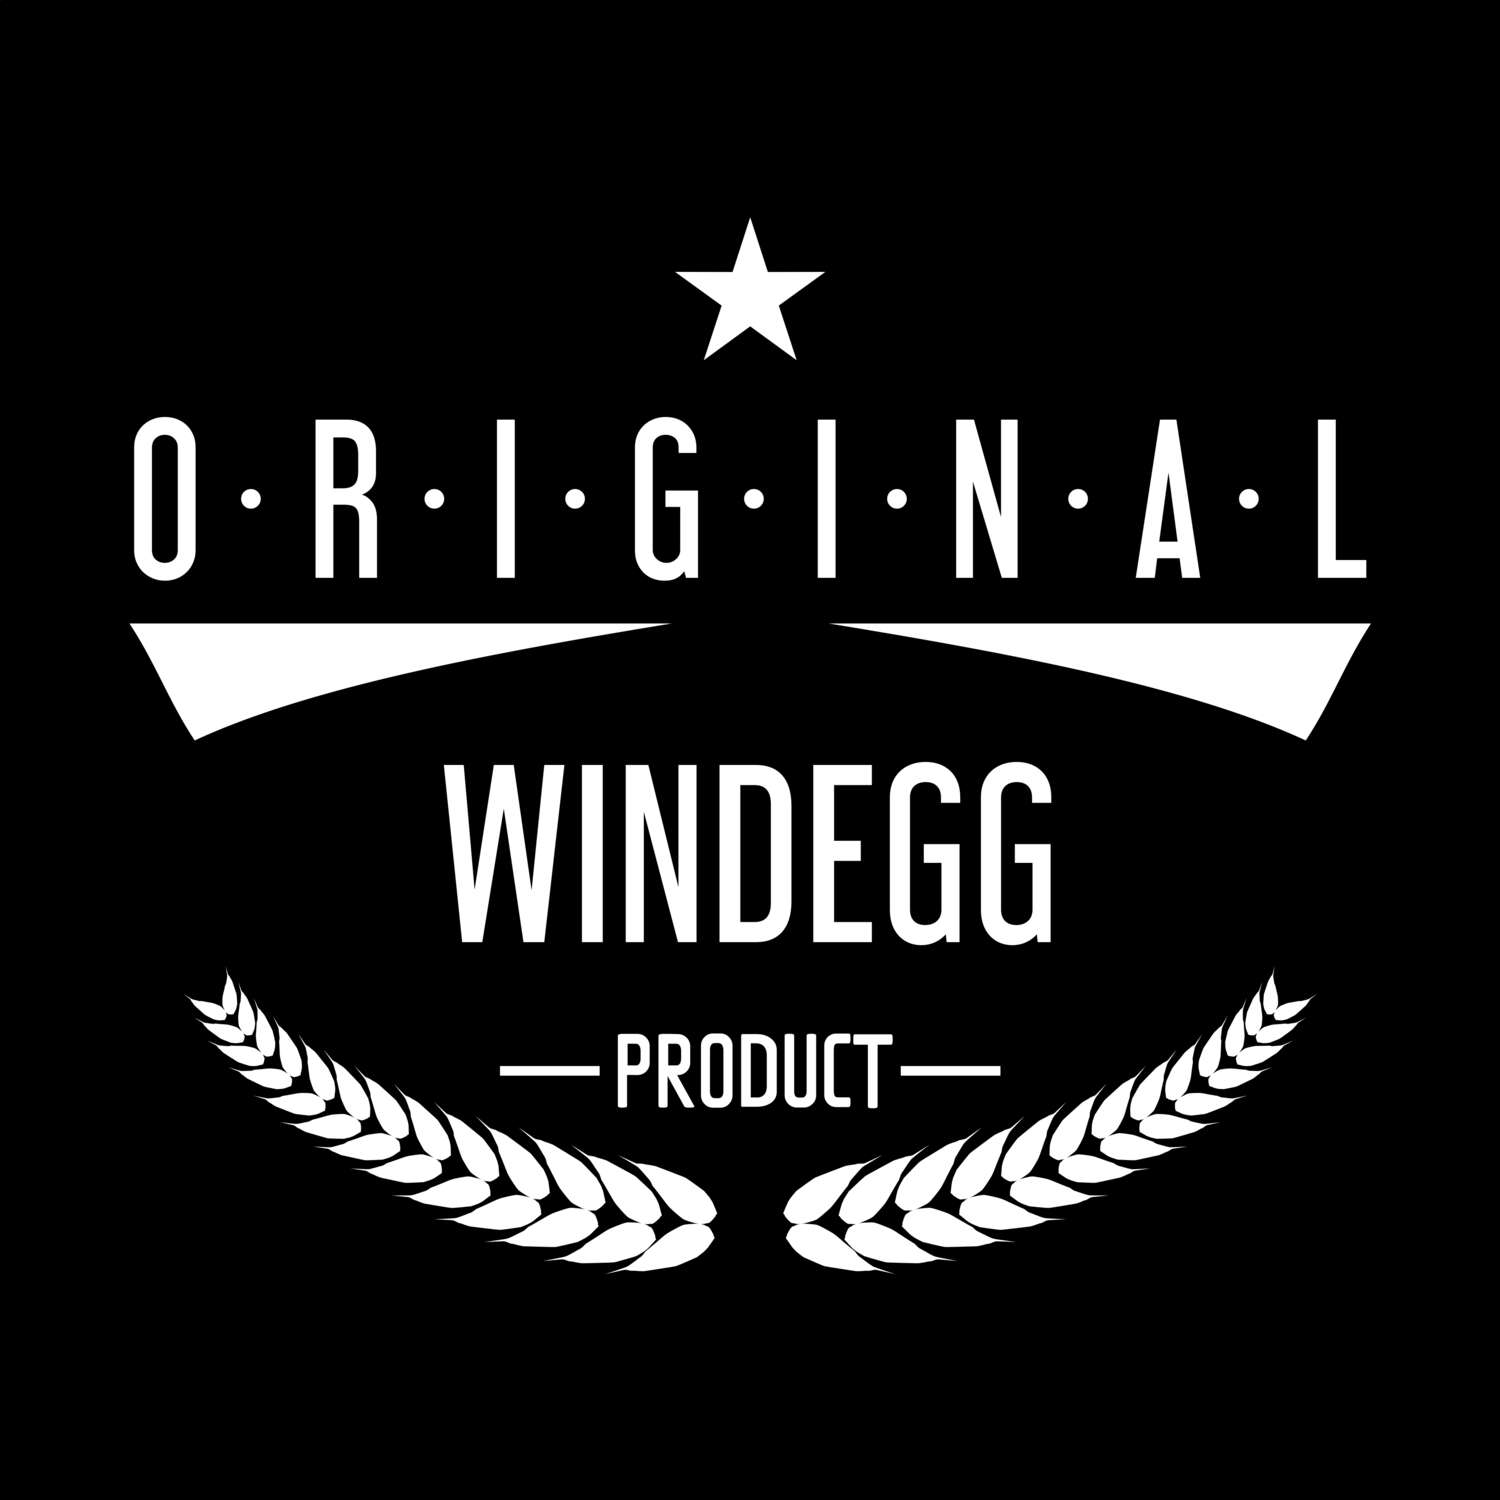 Windegg T-Shirt »Original Product«